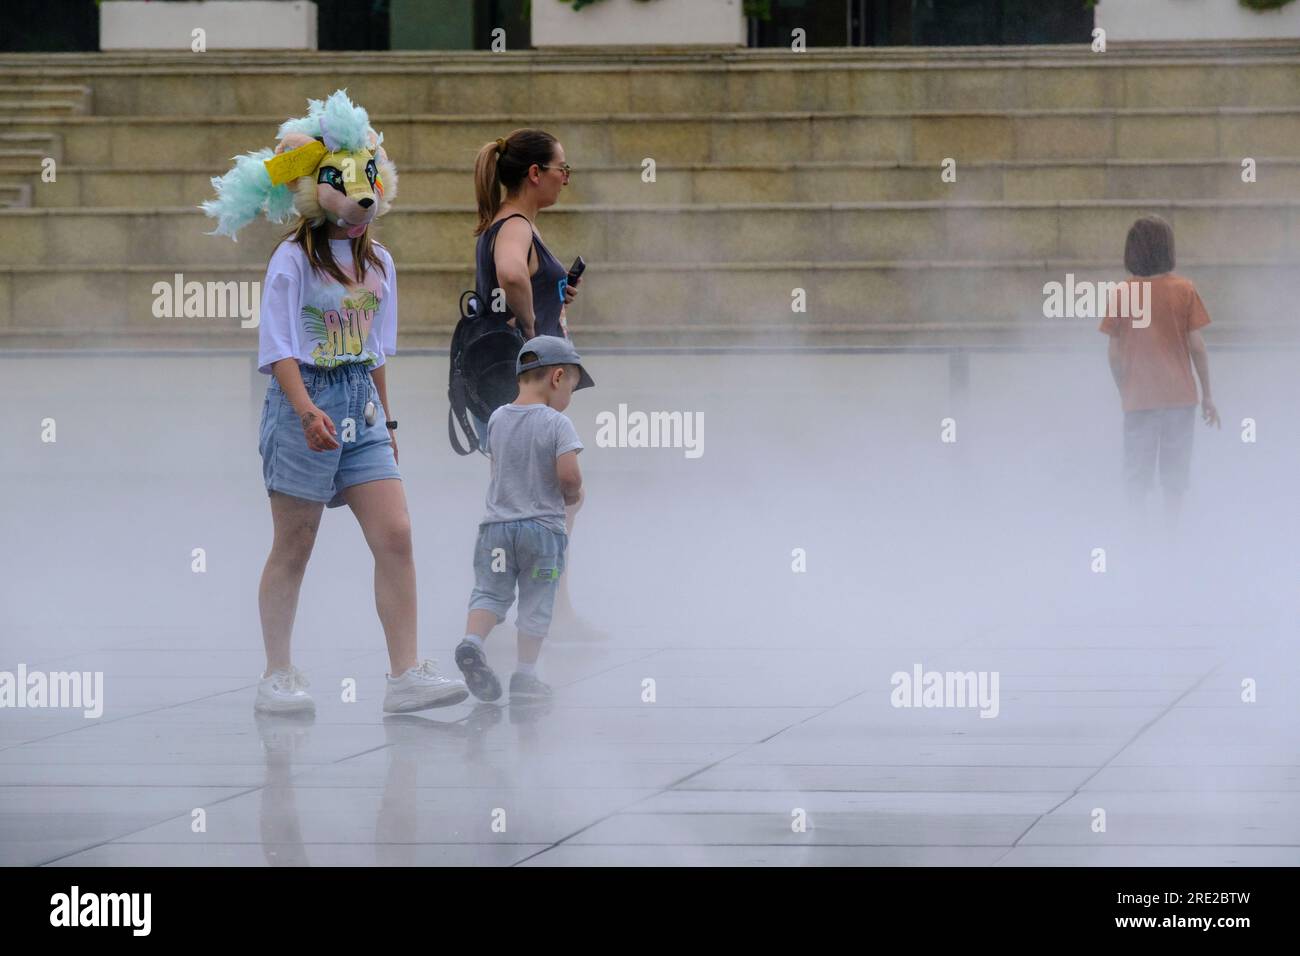 Kazakhstan, Almaty. Women and Child Walk through 'Fog Fountain' in front of Entrance to Caspian University. Stock Photo